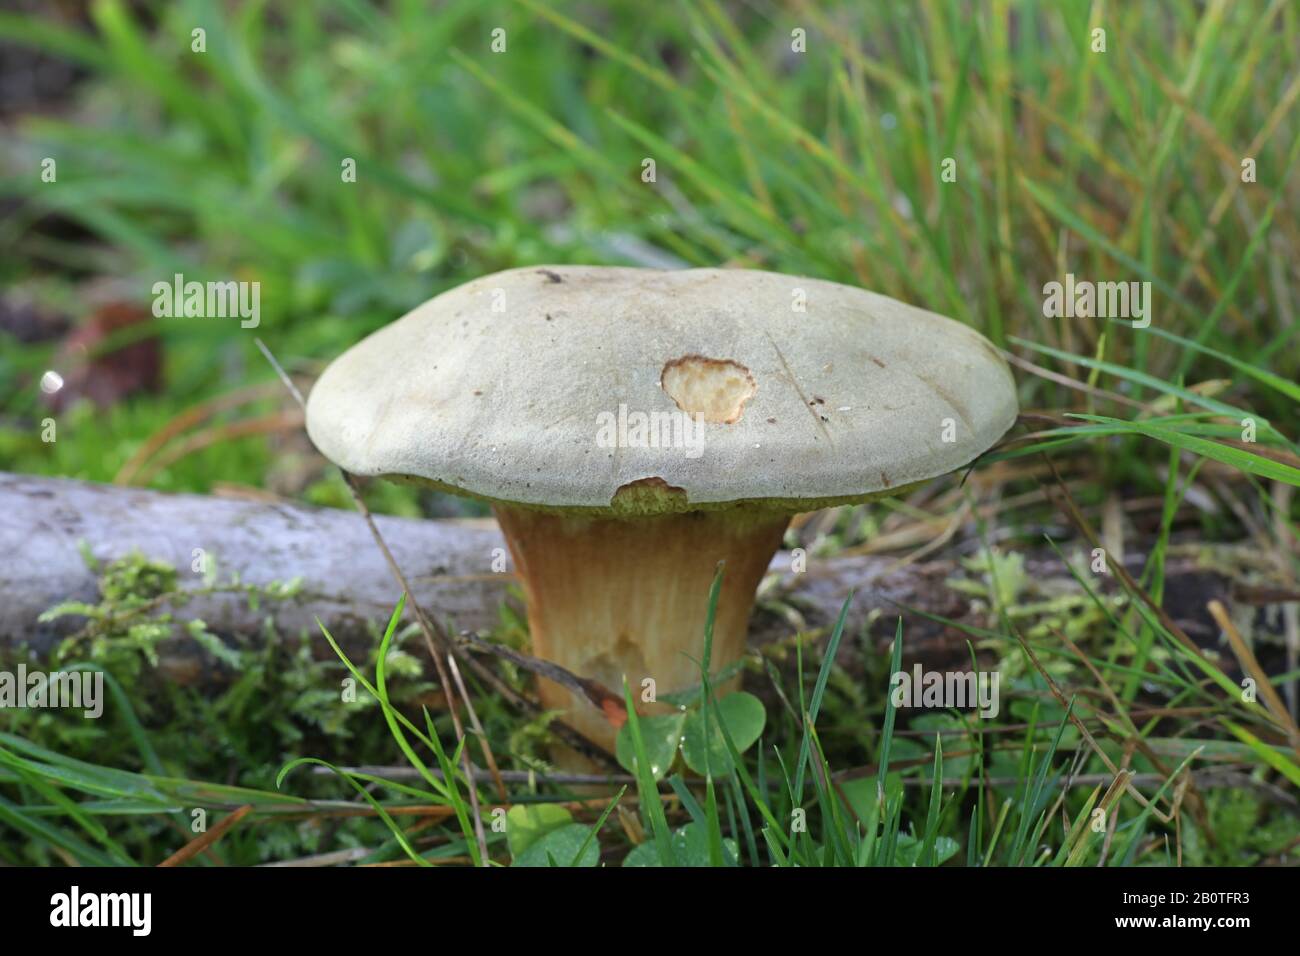 Xerocomus subtomentosus, known as suede bolete, brown and yellow bolet, boring brown bolete or yellow-cracked bolete, wild edible mushroom from Finlan Stock Photo